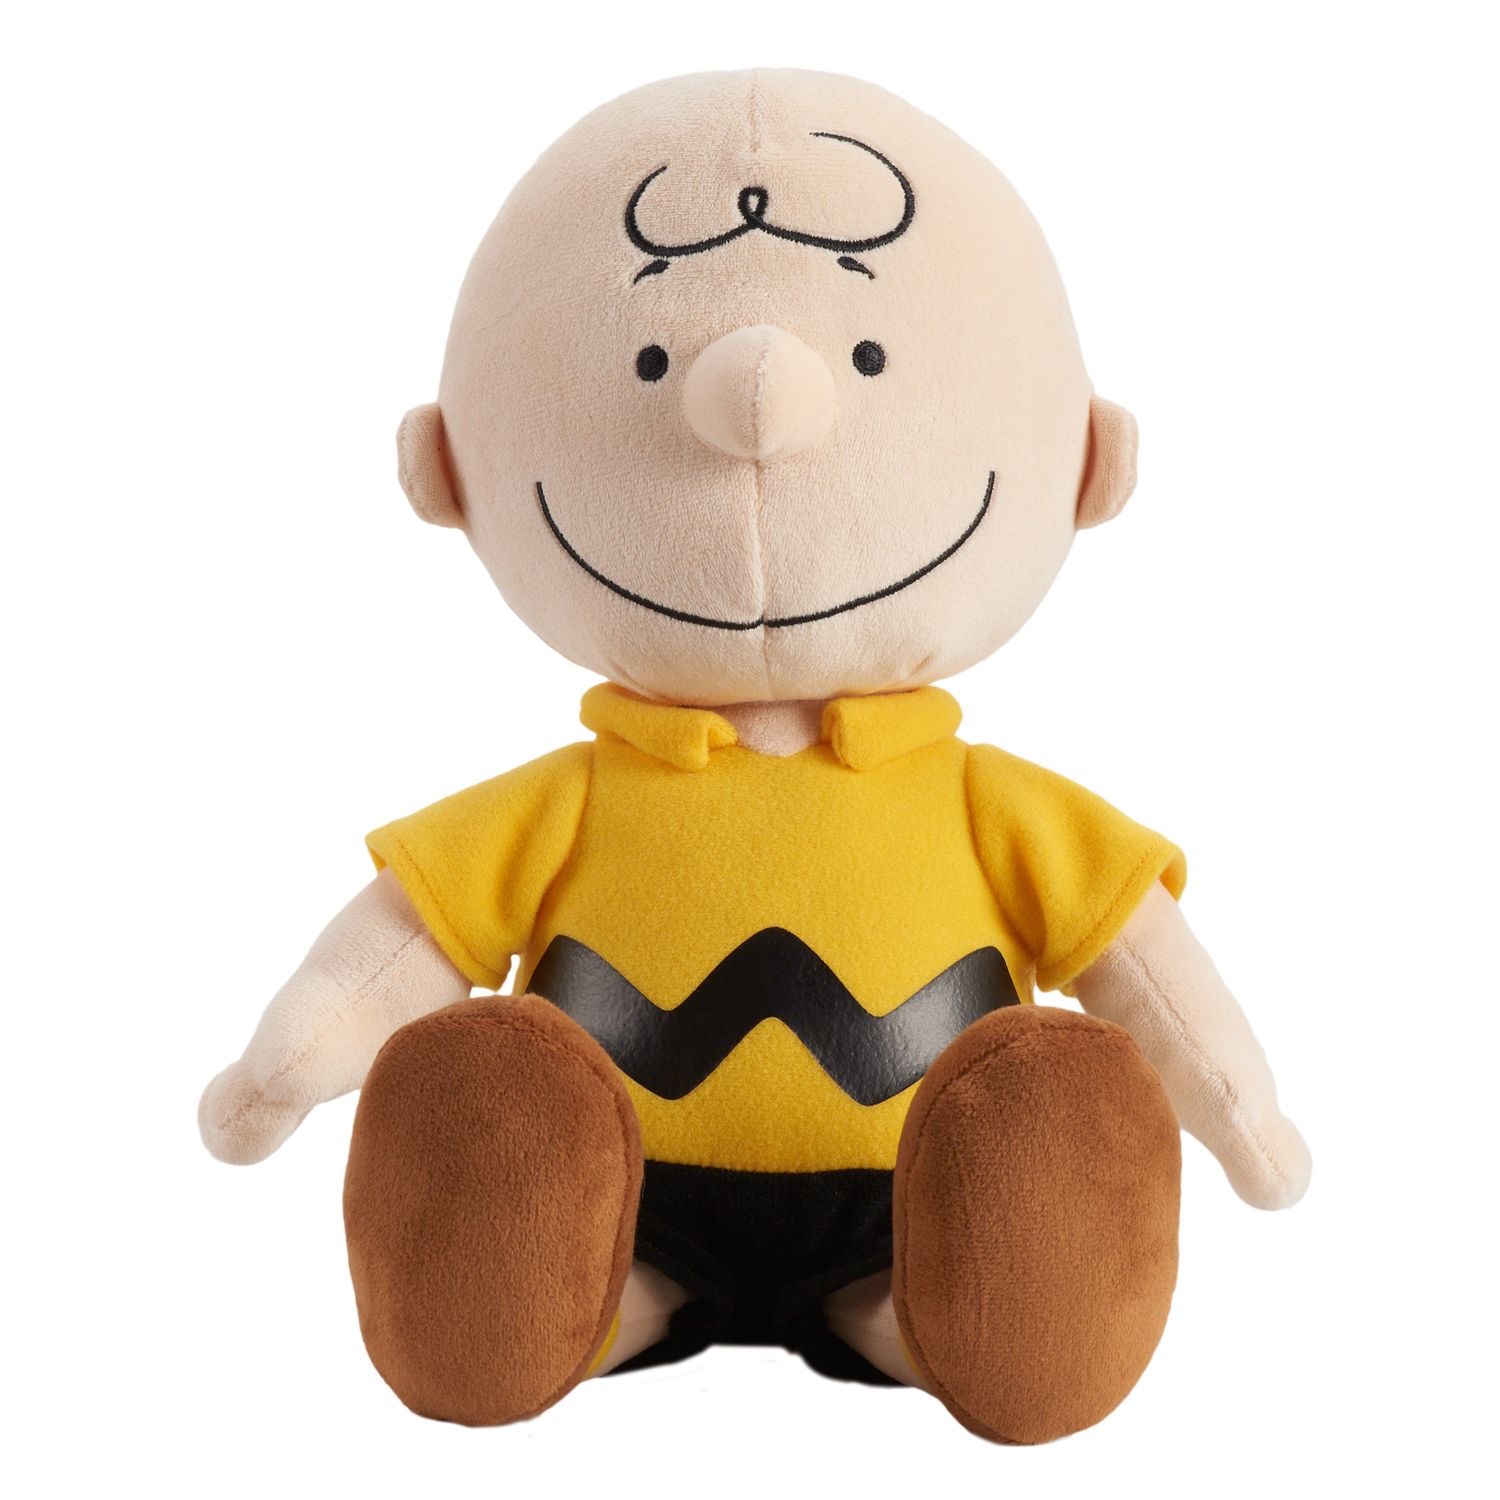 peanuts stuffed characters